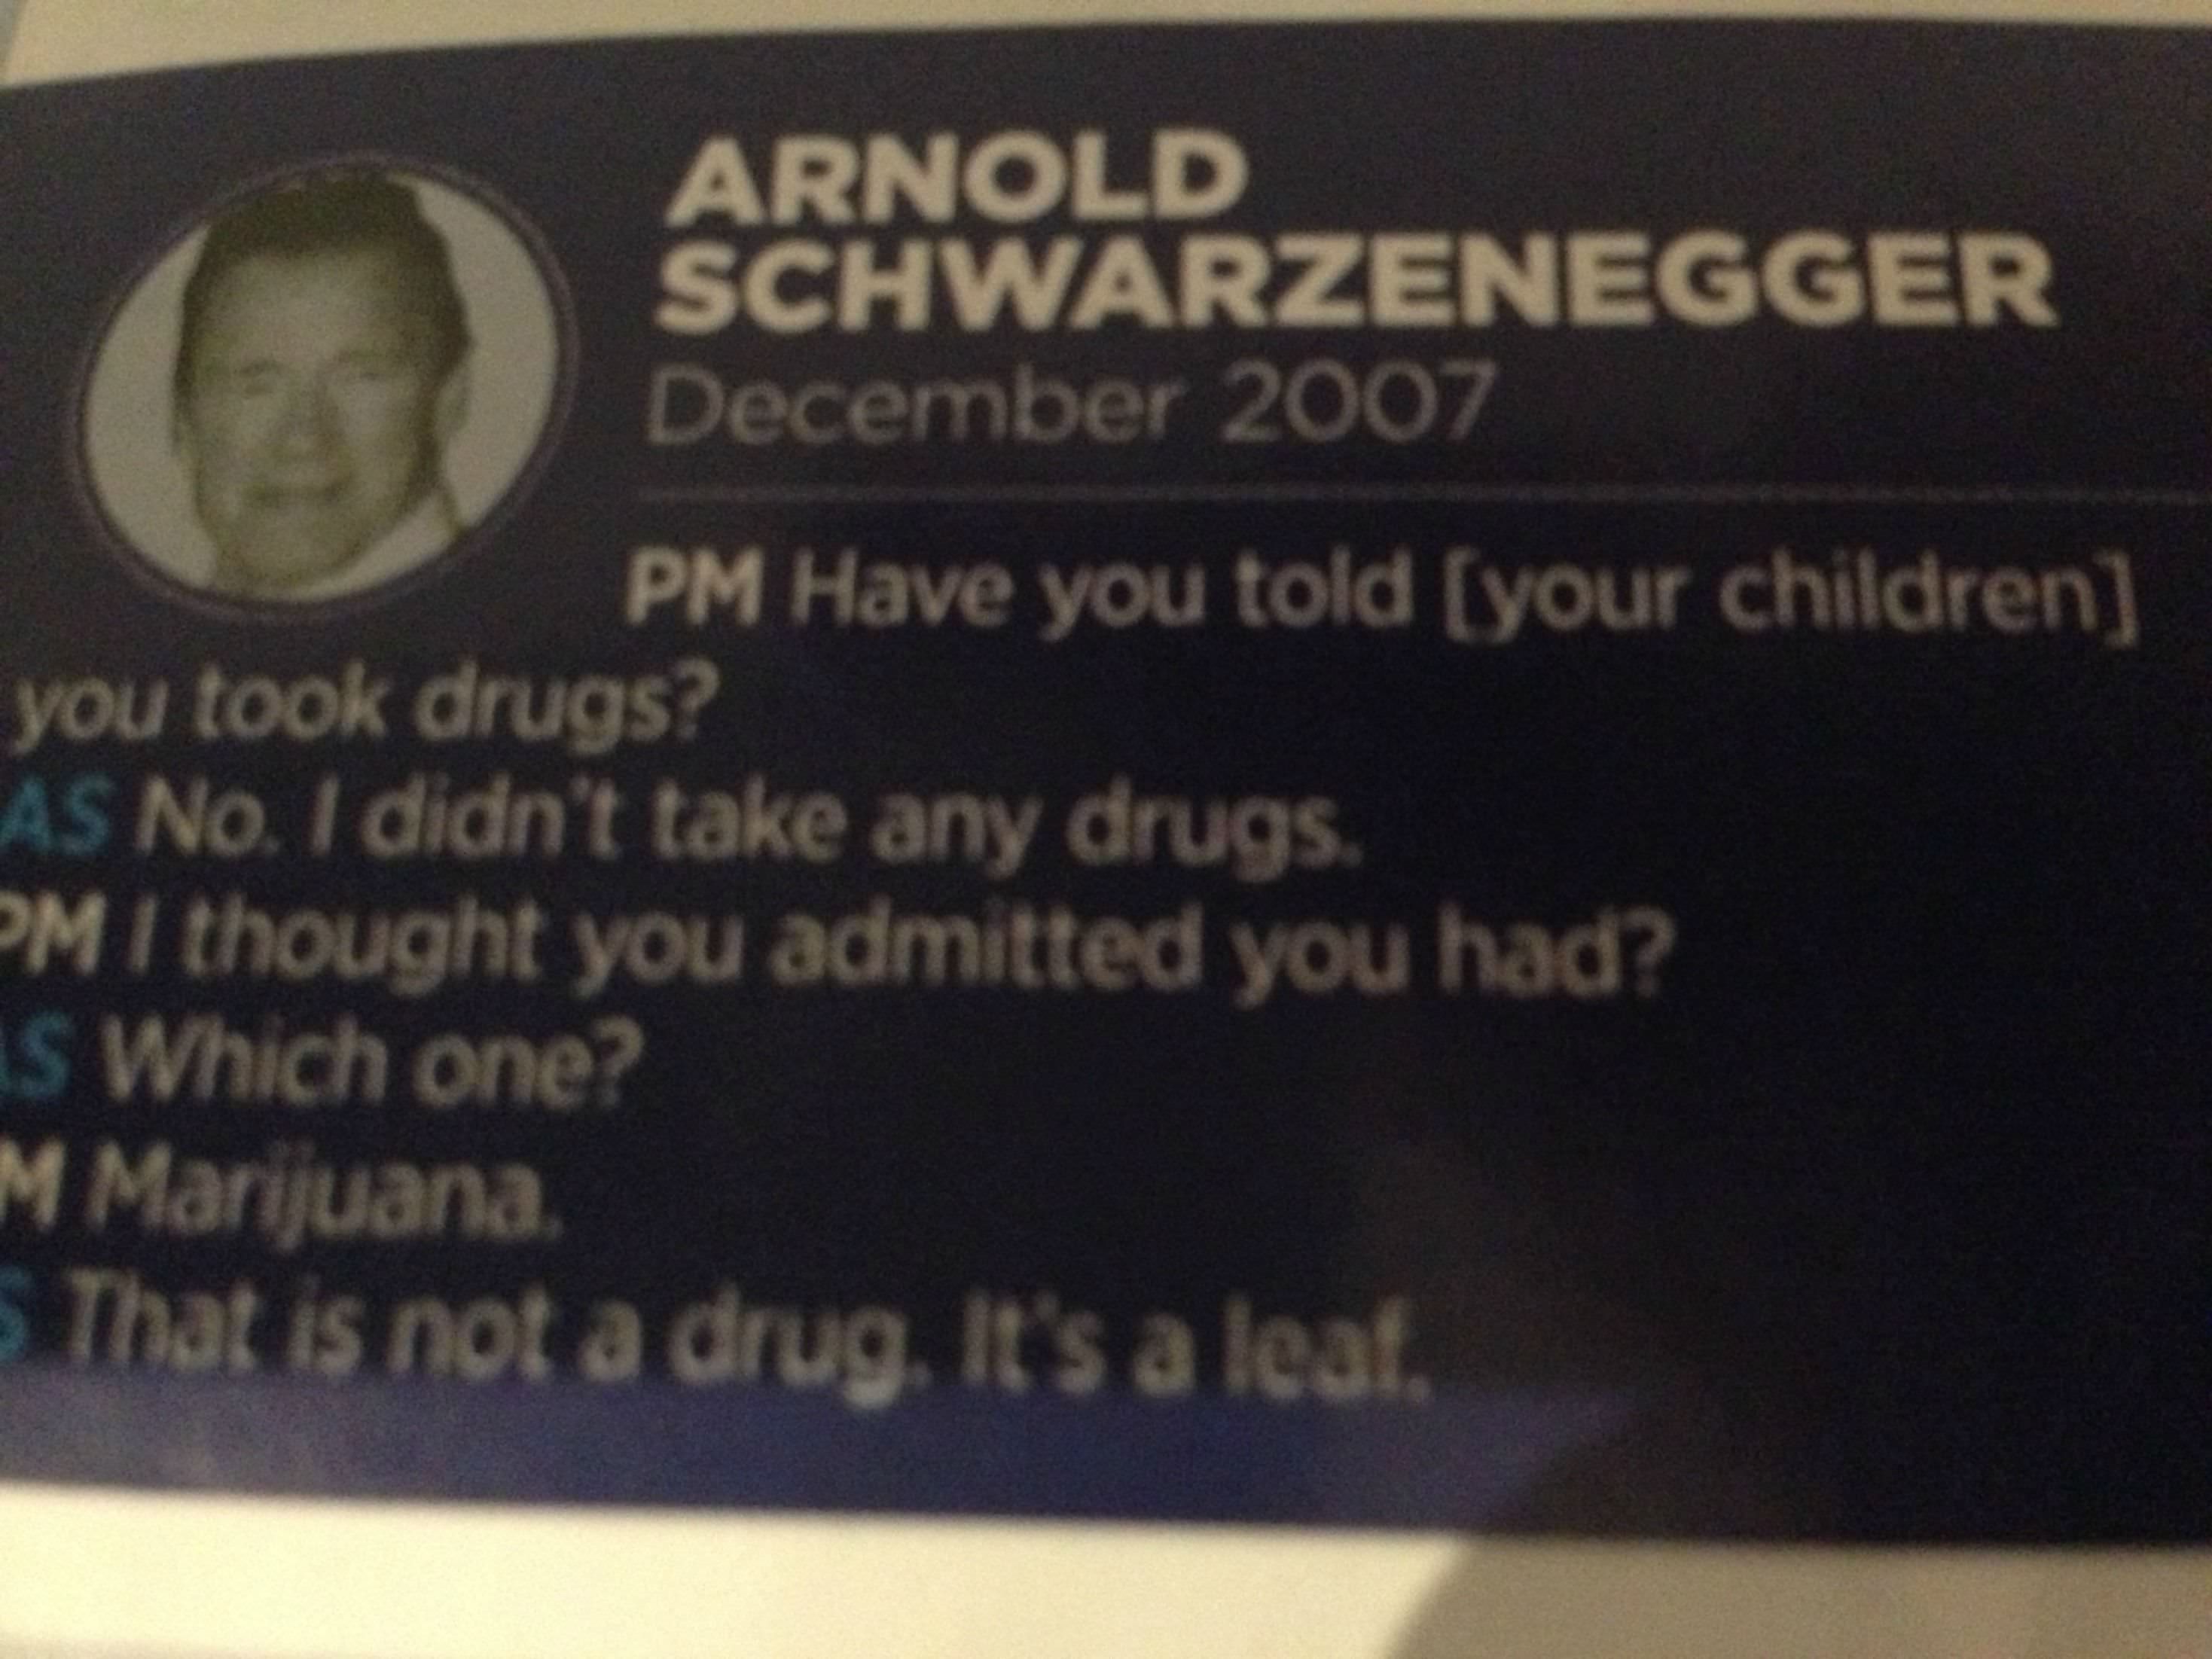 Arnie on drugs